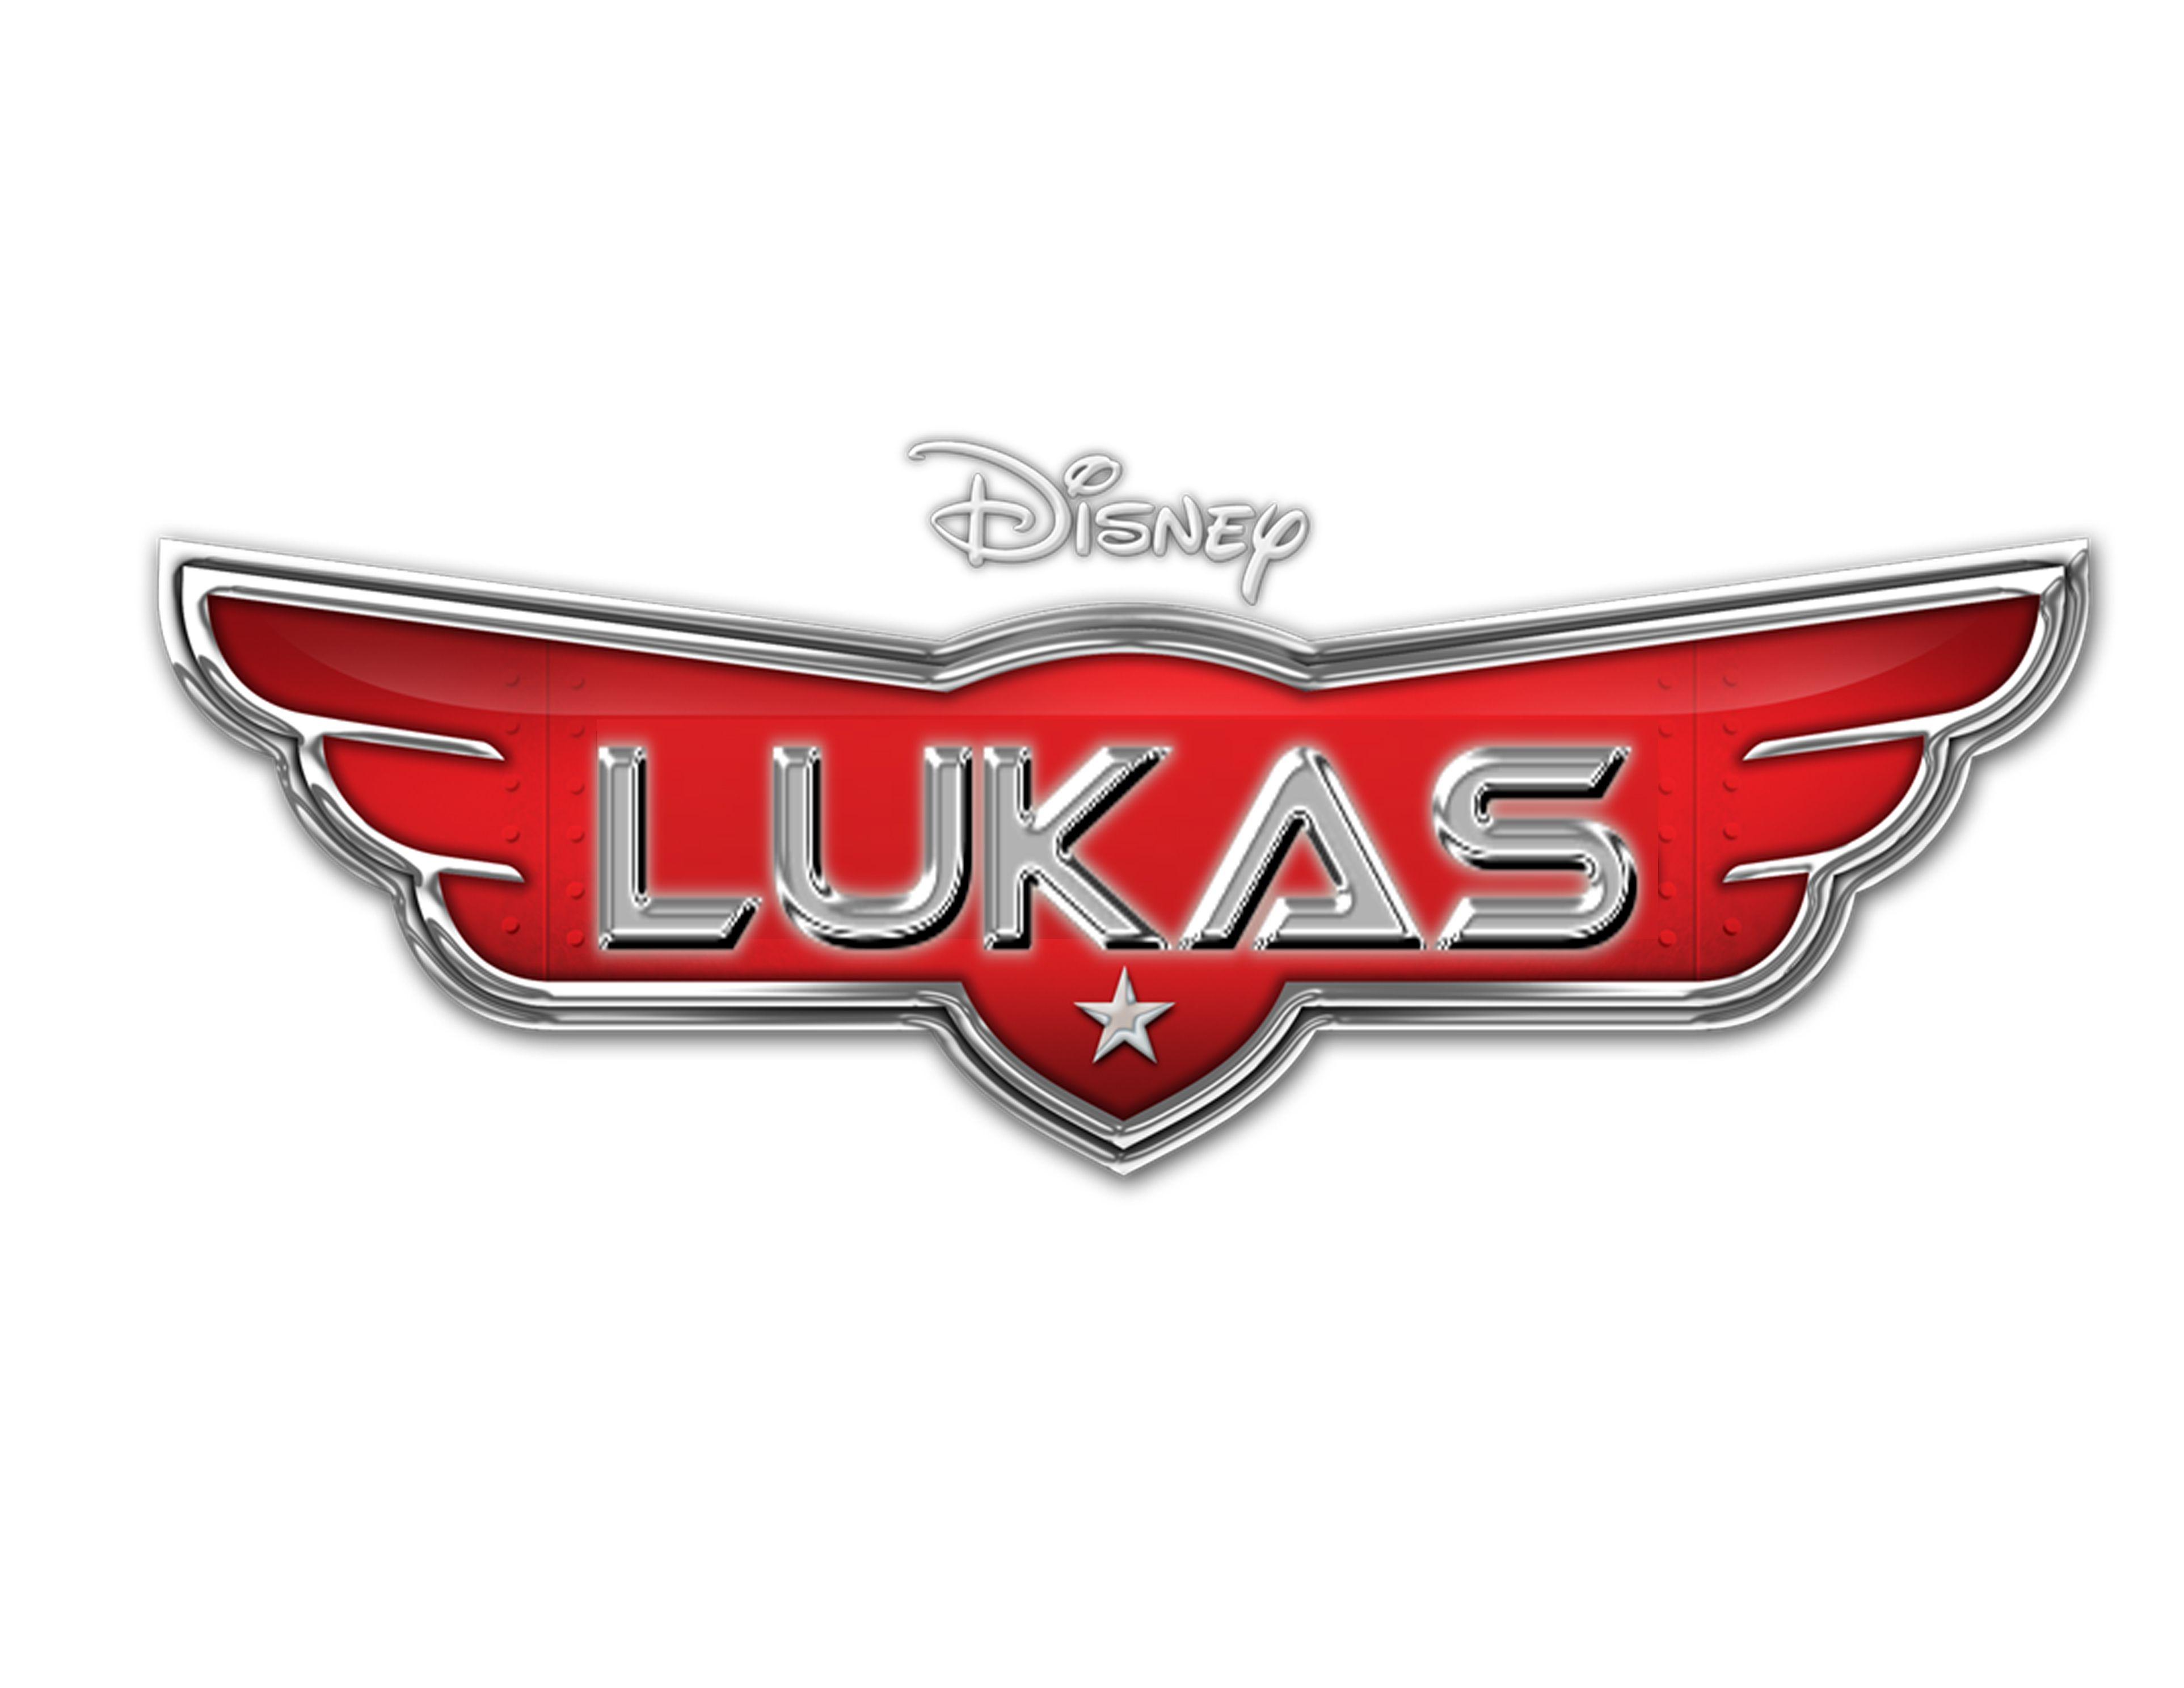 Disney Planes Logo - Disney Planes logo for iron on tshirts, wall decor or party décor